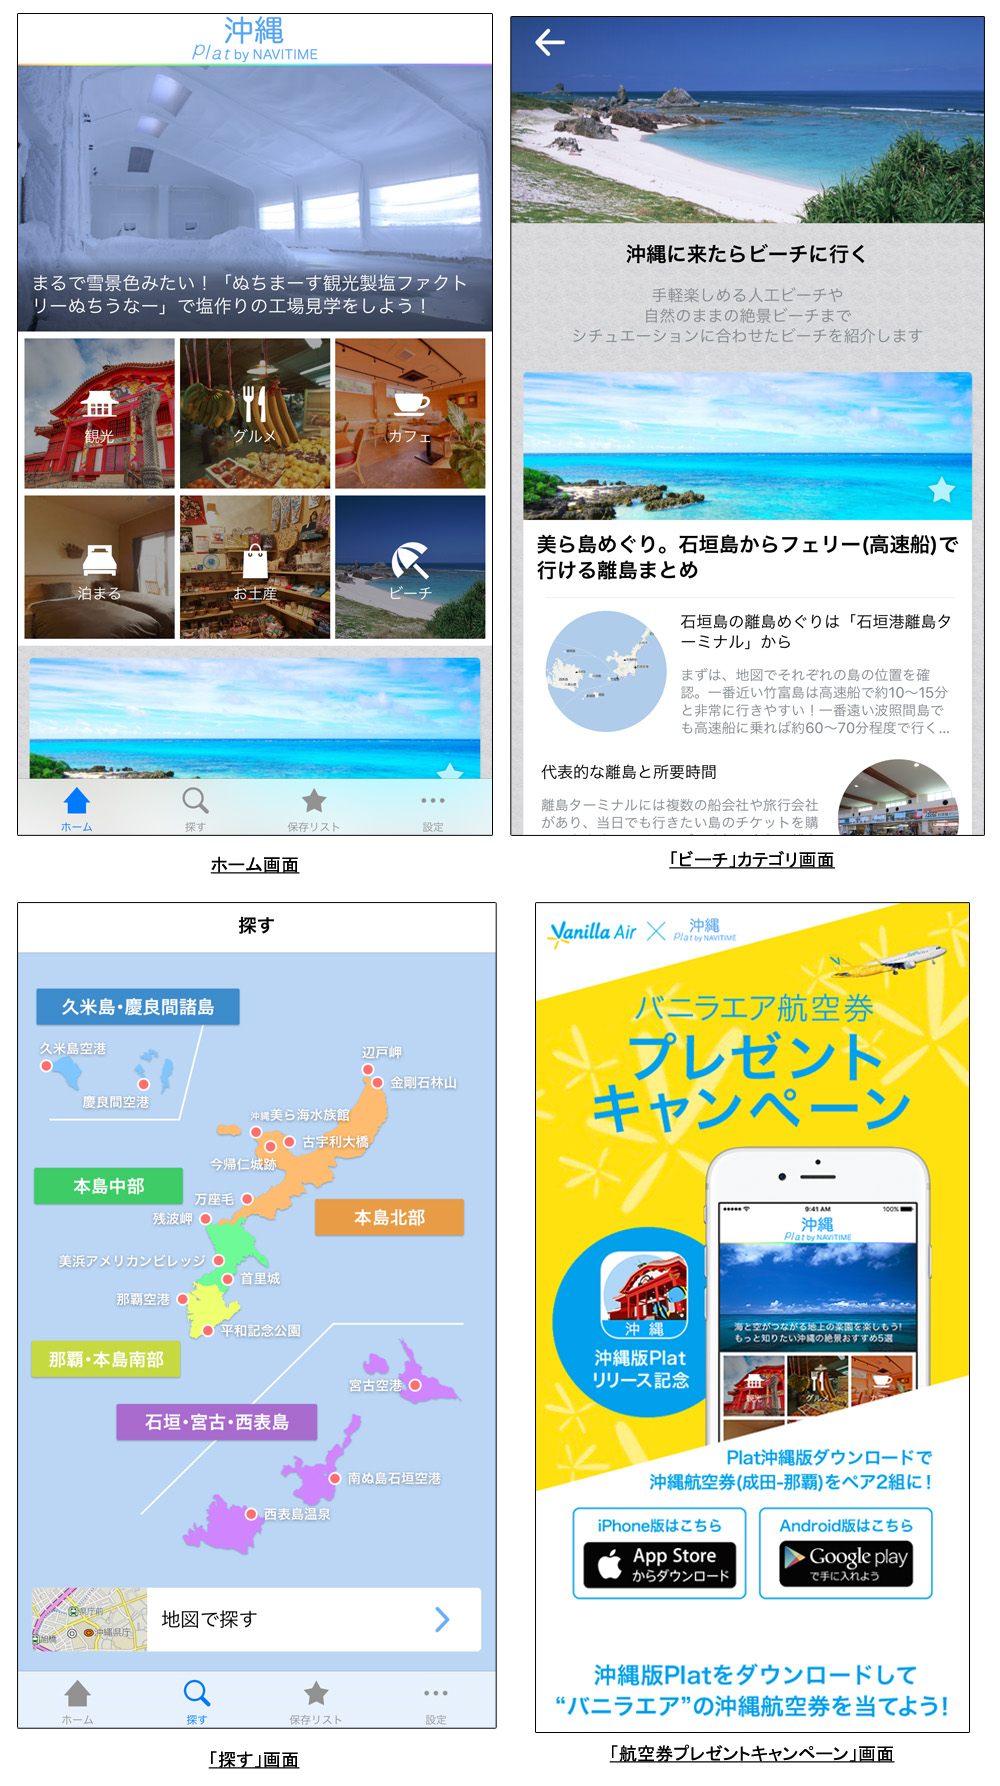 http://corporate.navitime.co.jp/topics/images/okinawa%20plat.jpg